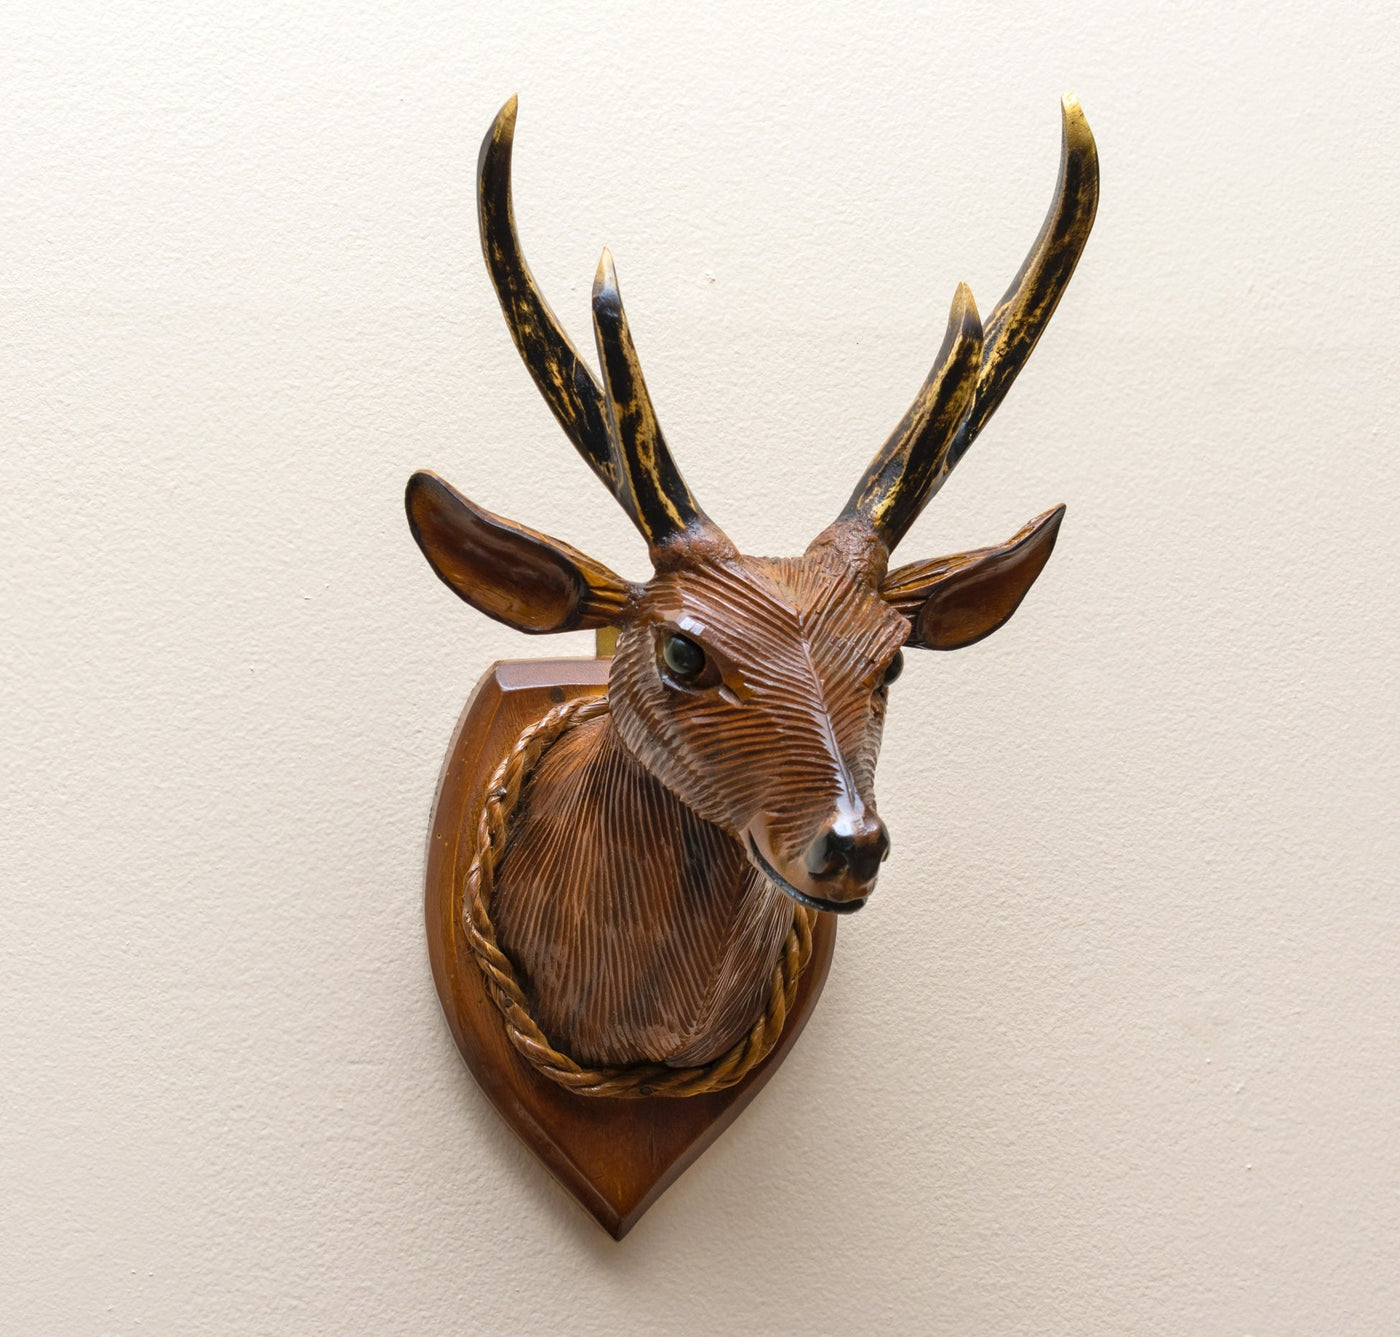 14" Deer Wall Hanging Decor Head Sculpture Art Decorative Home Decor Accent Lodge Wooden Handmade Figurine Handcrafted Decoration